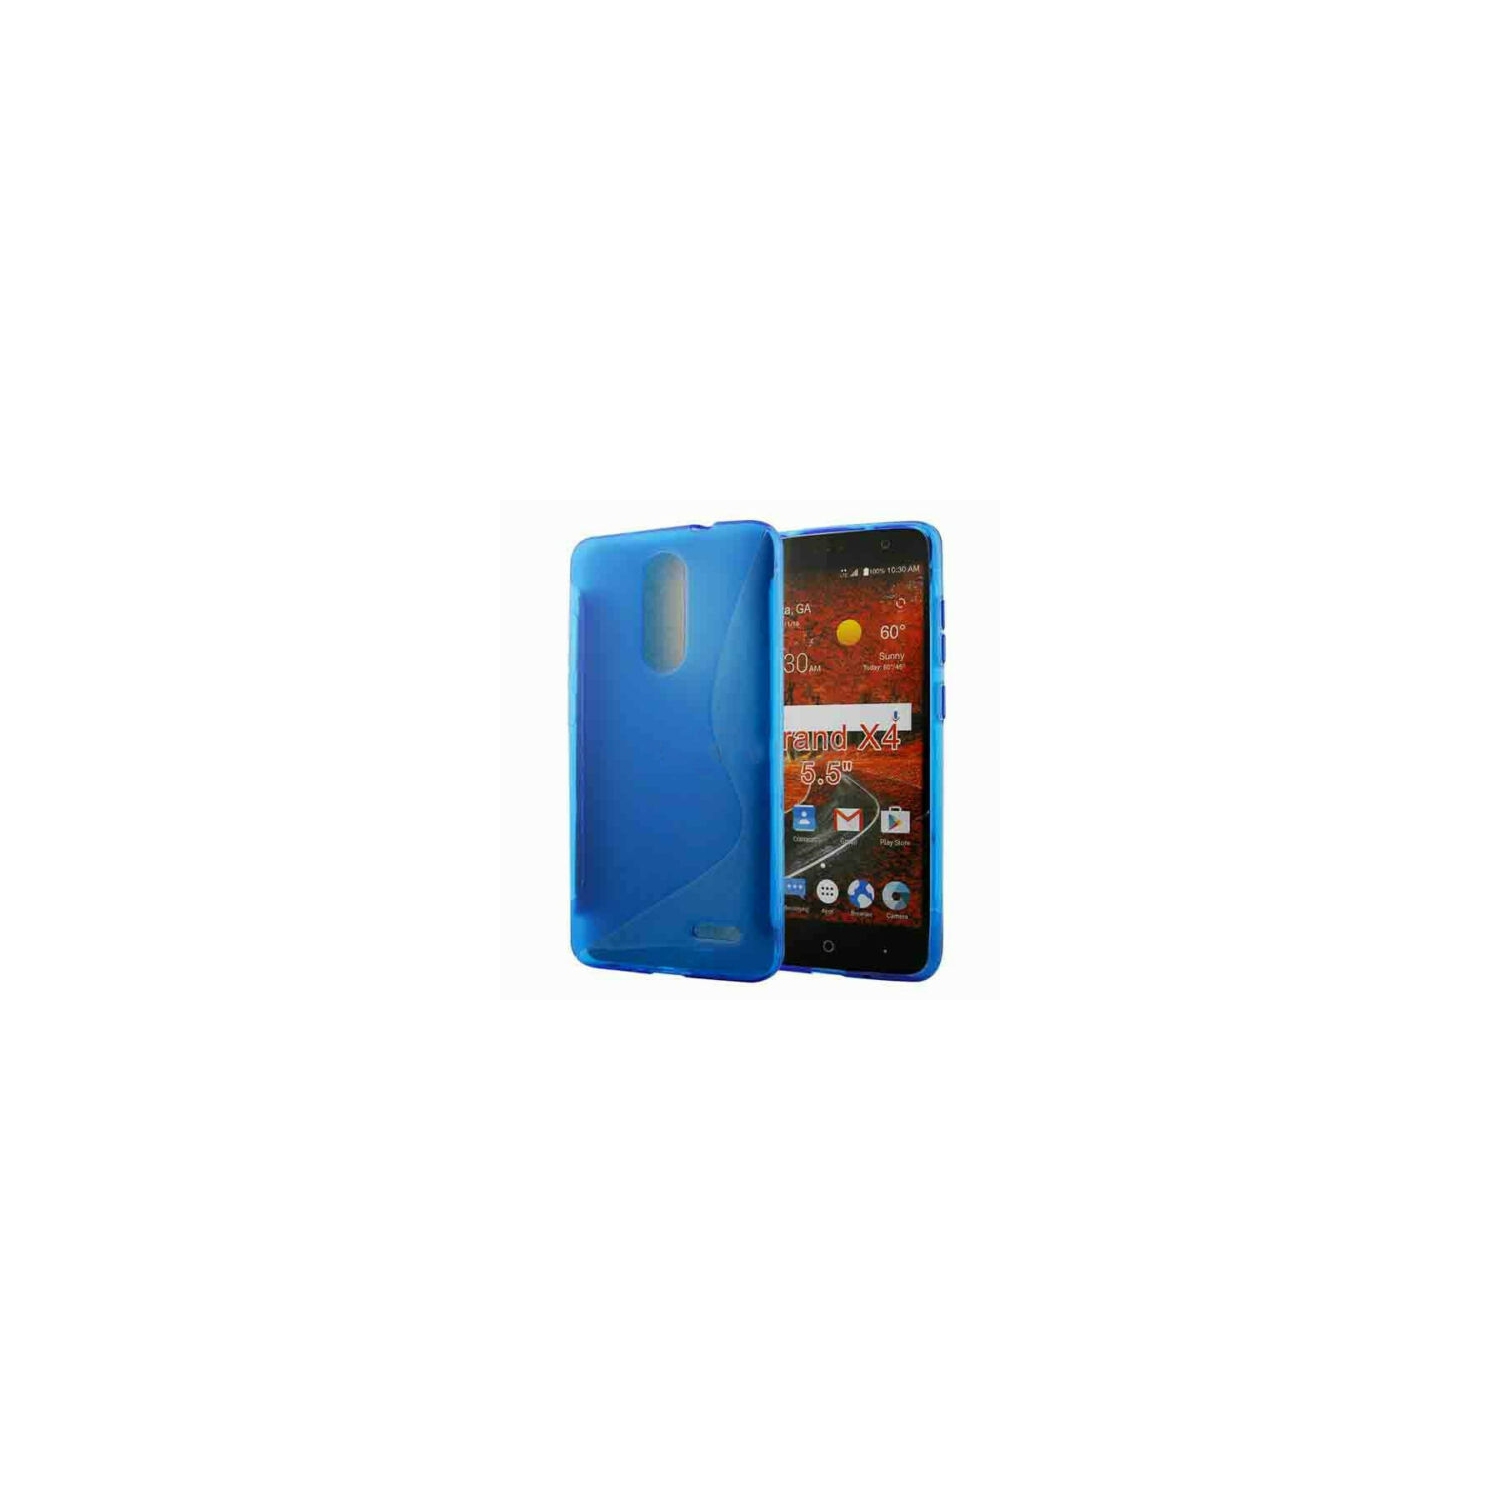 【CSmart】 Ultra Thin Soft TPU Silicone Jelly Bumper Back Cover Case for ZTE Grand X4, Blue